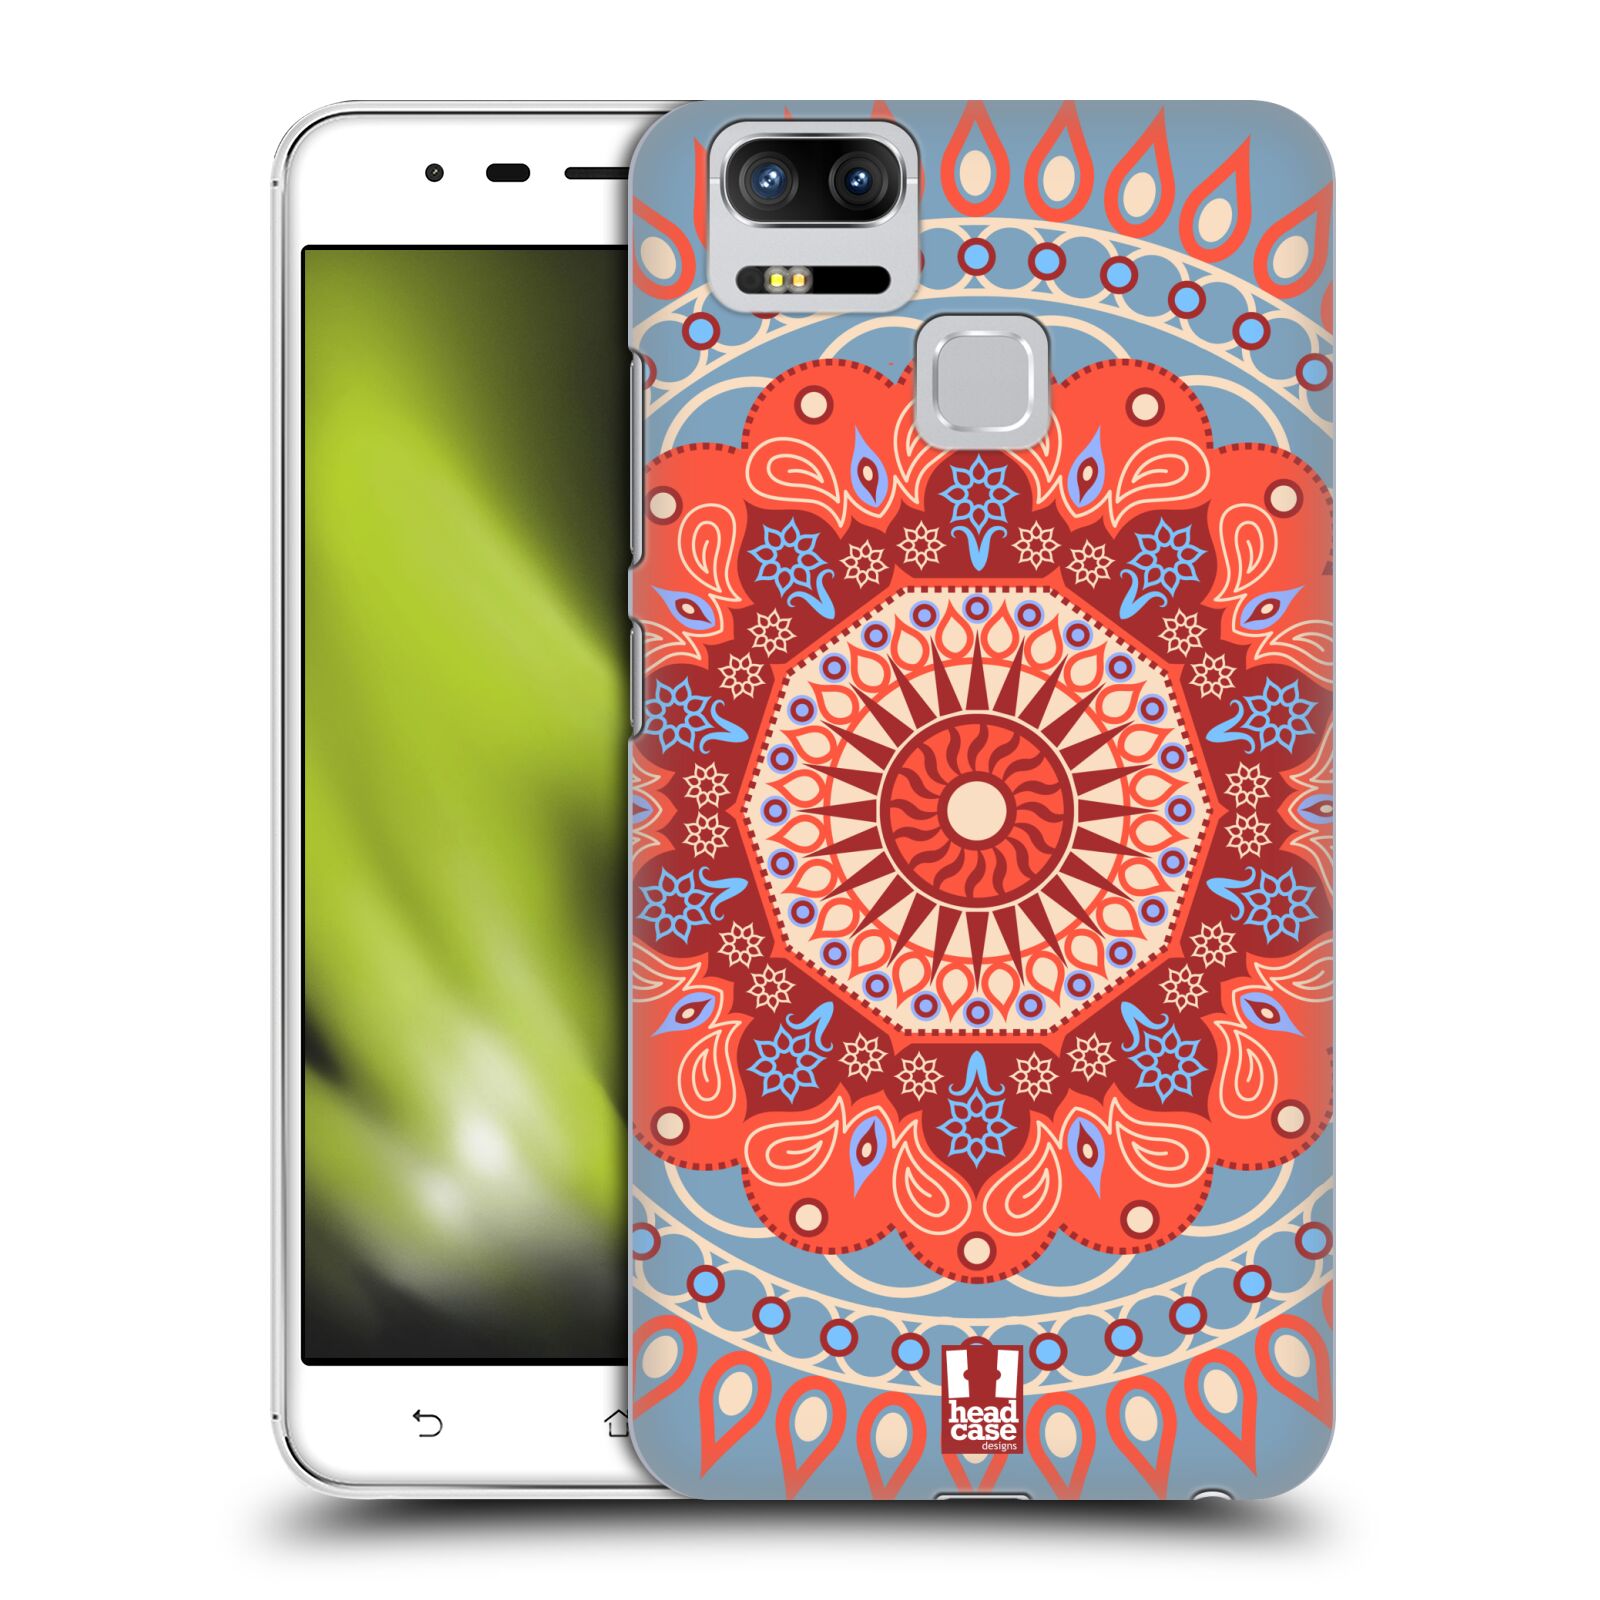 HEAD CASE plastový obal na mobil Asus Zenfone 3 Zoom ZE553KL vzor Indie Mandala slunce barevný motiv ČERVENÁ A MODRÁ